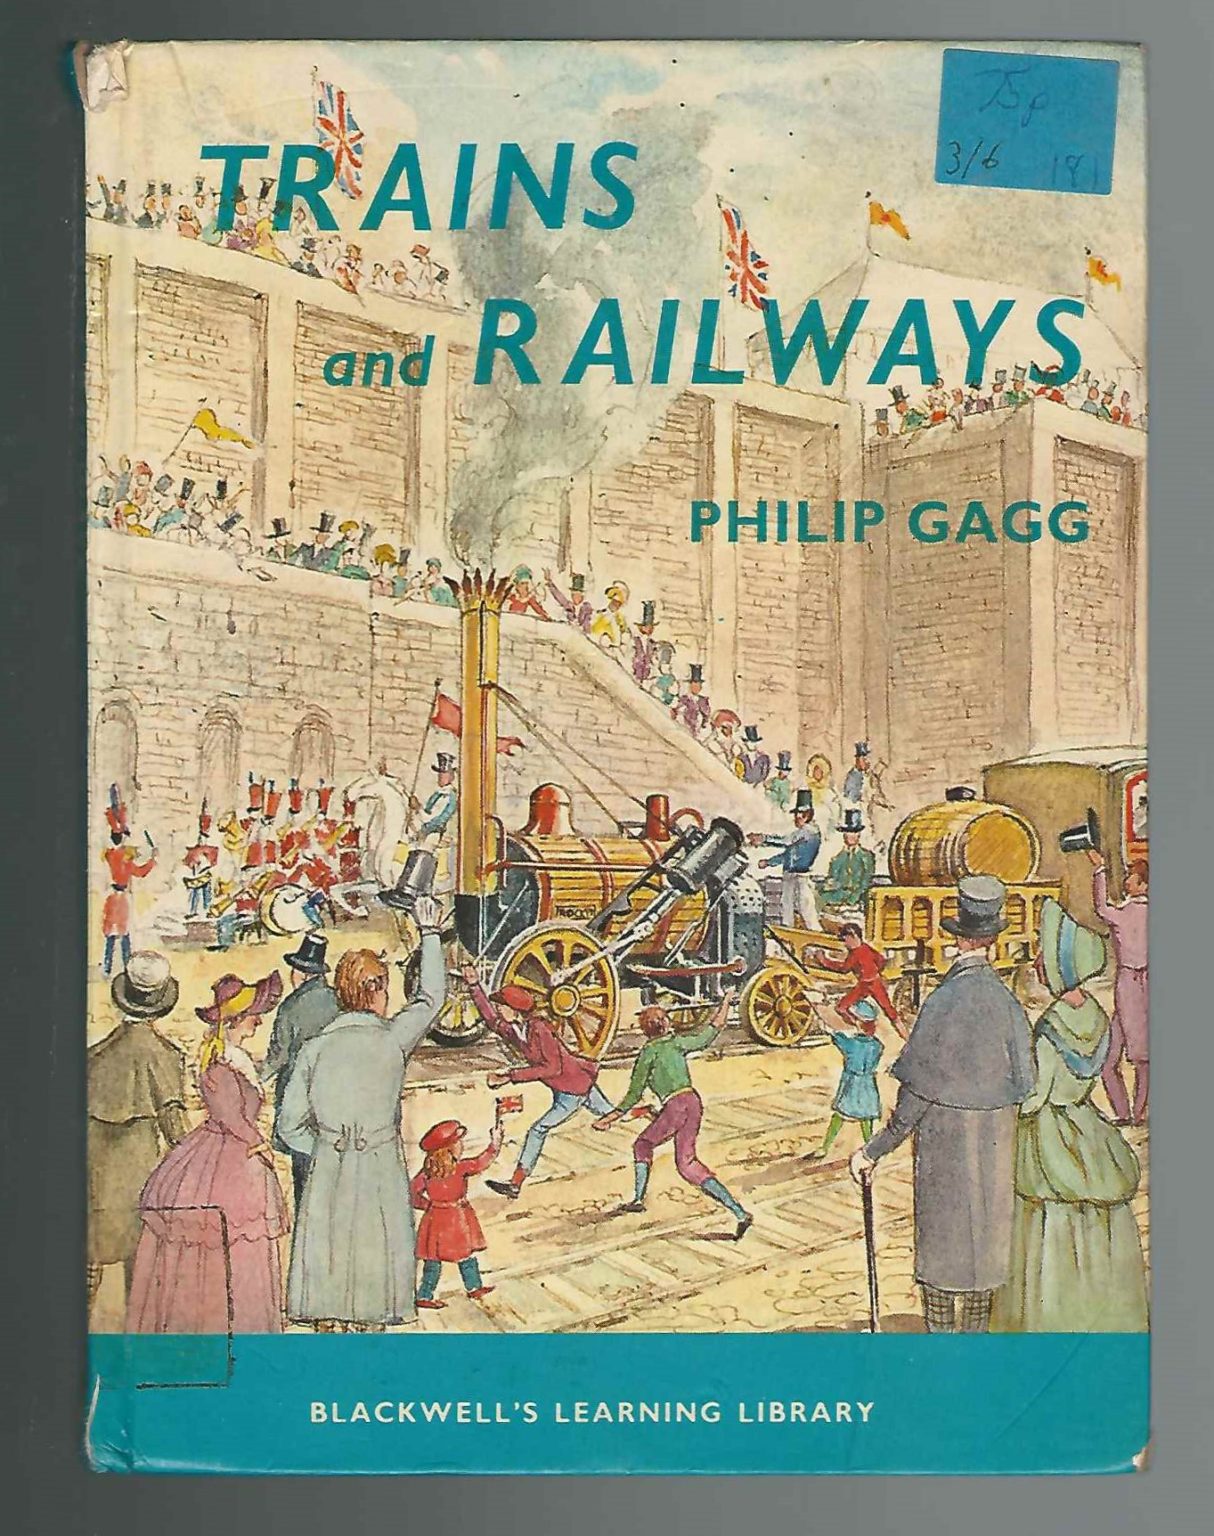 the railway series book